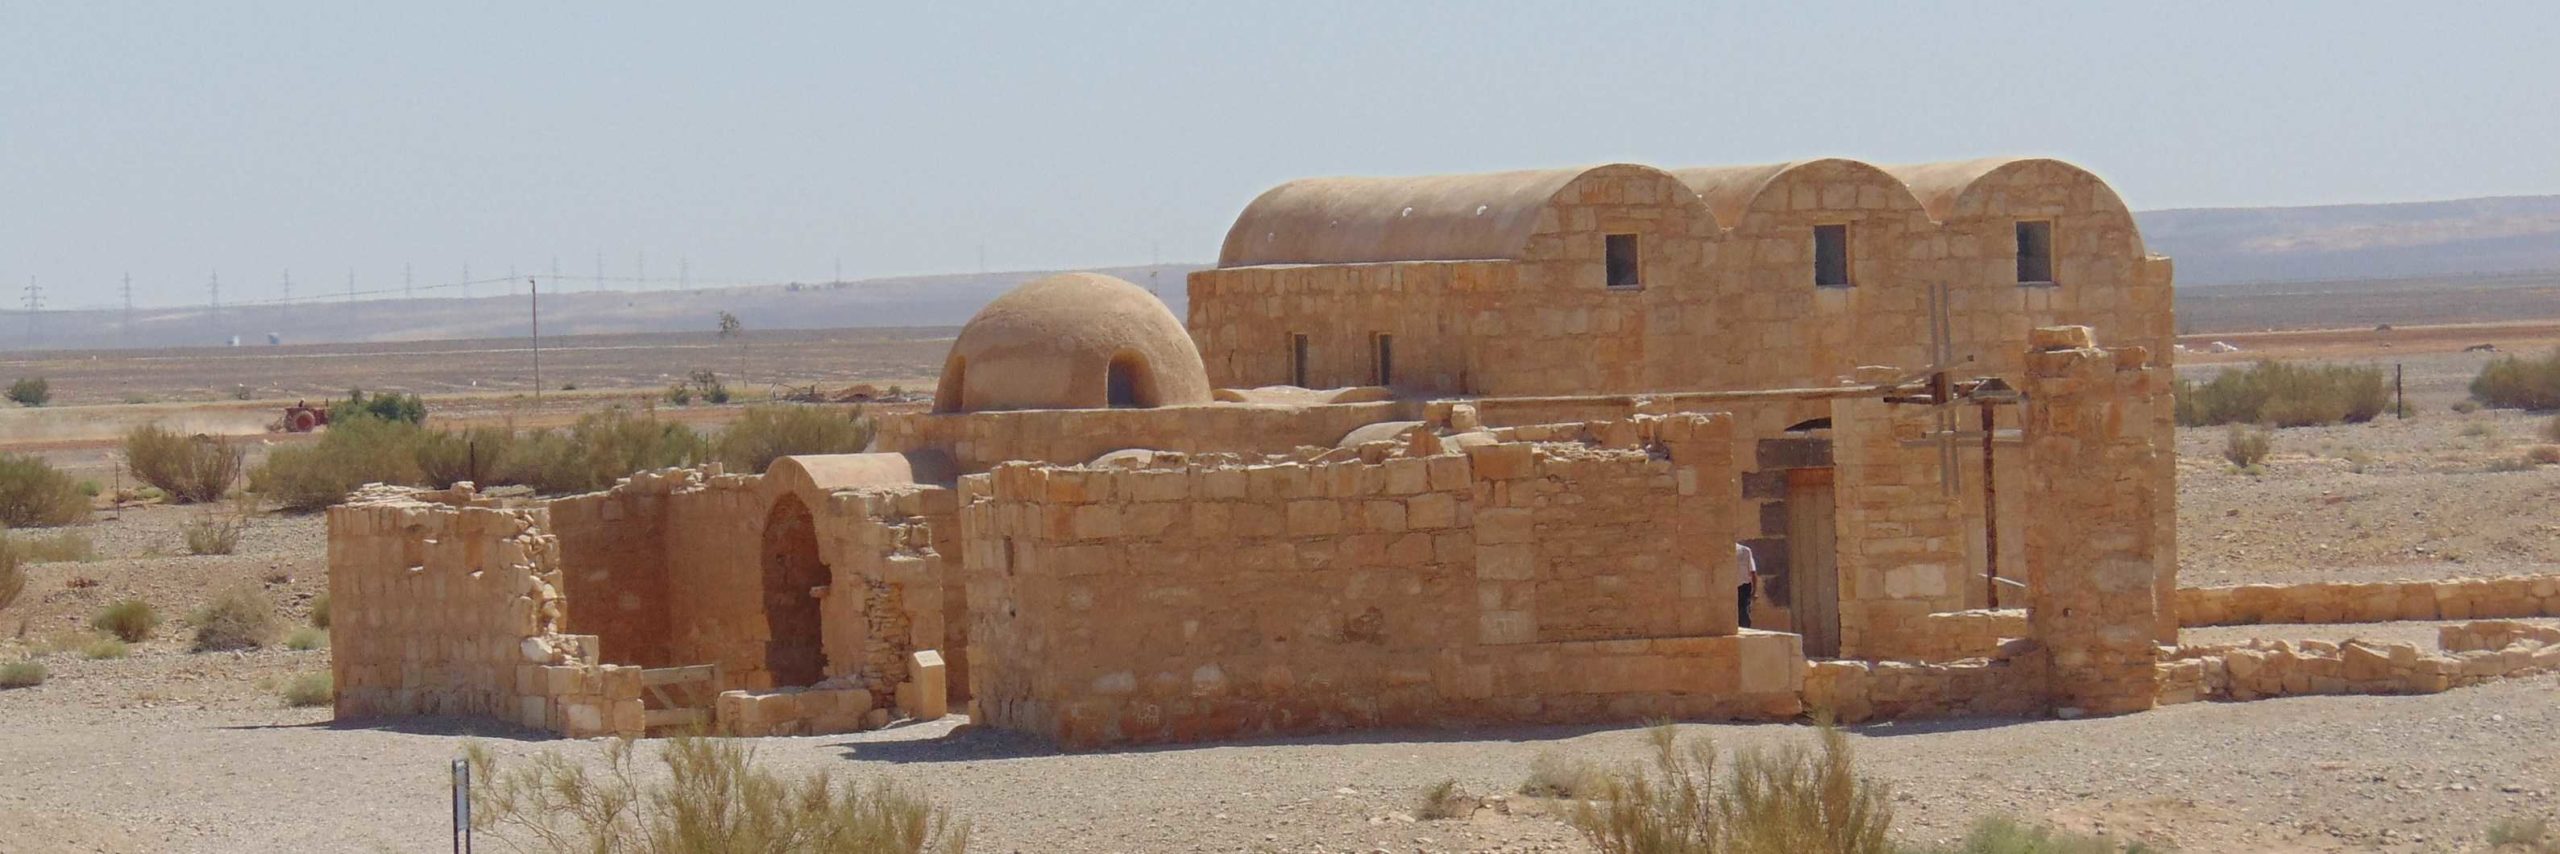 The Umayyad desert complex of Qusayra ‘Amra, one of Jordan’s famous “desert castles” (qusur), dated to the eighth century CE. Photo by Tareq Ramdan